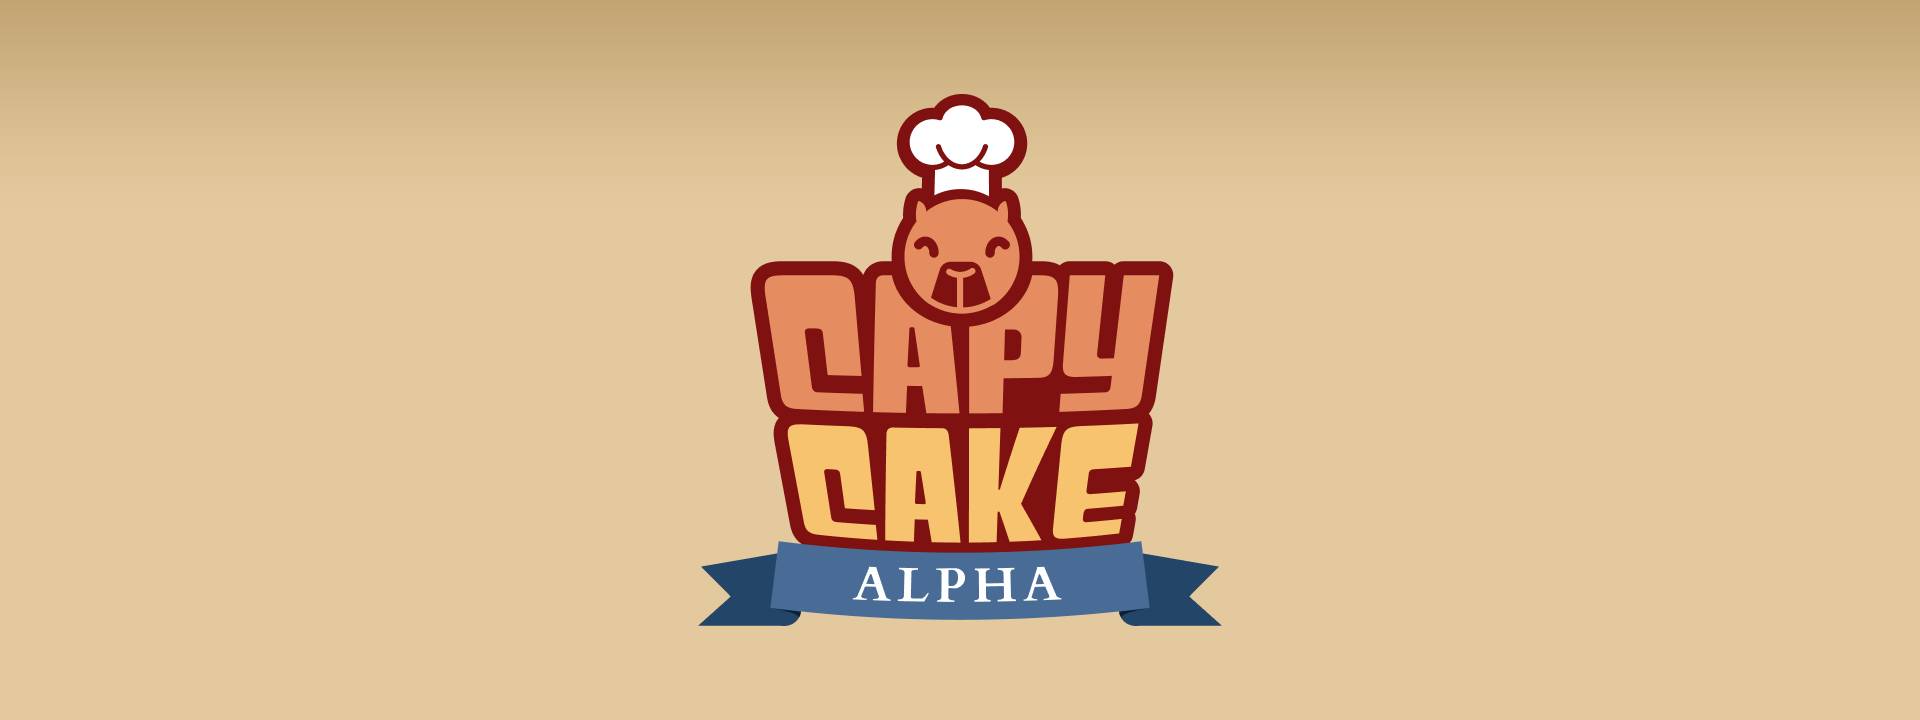 Capy Cake